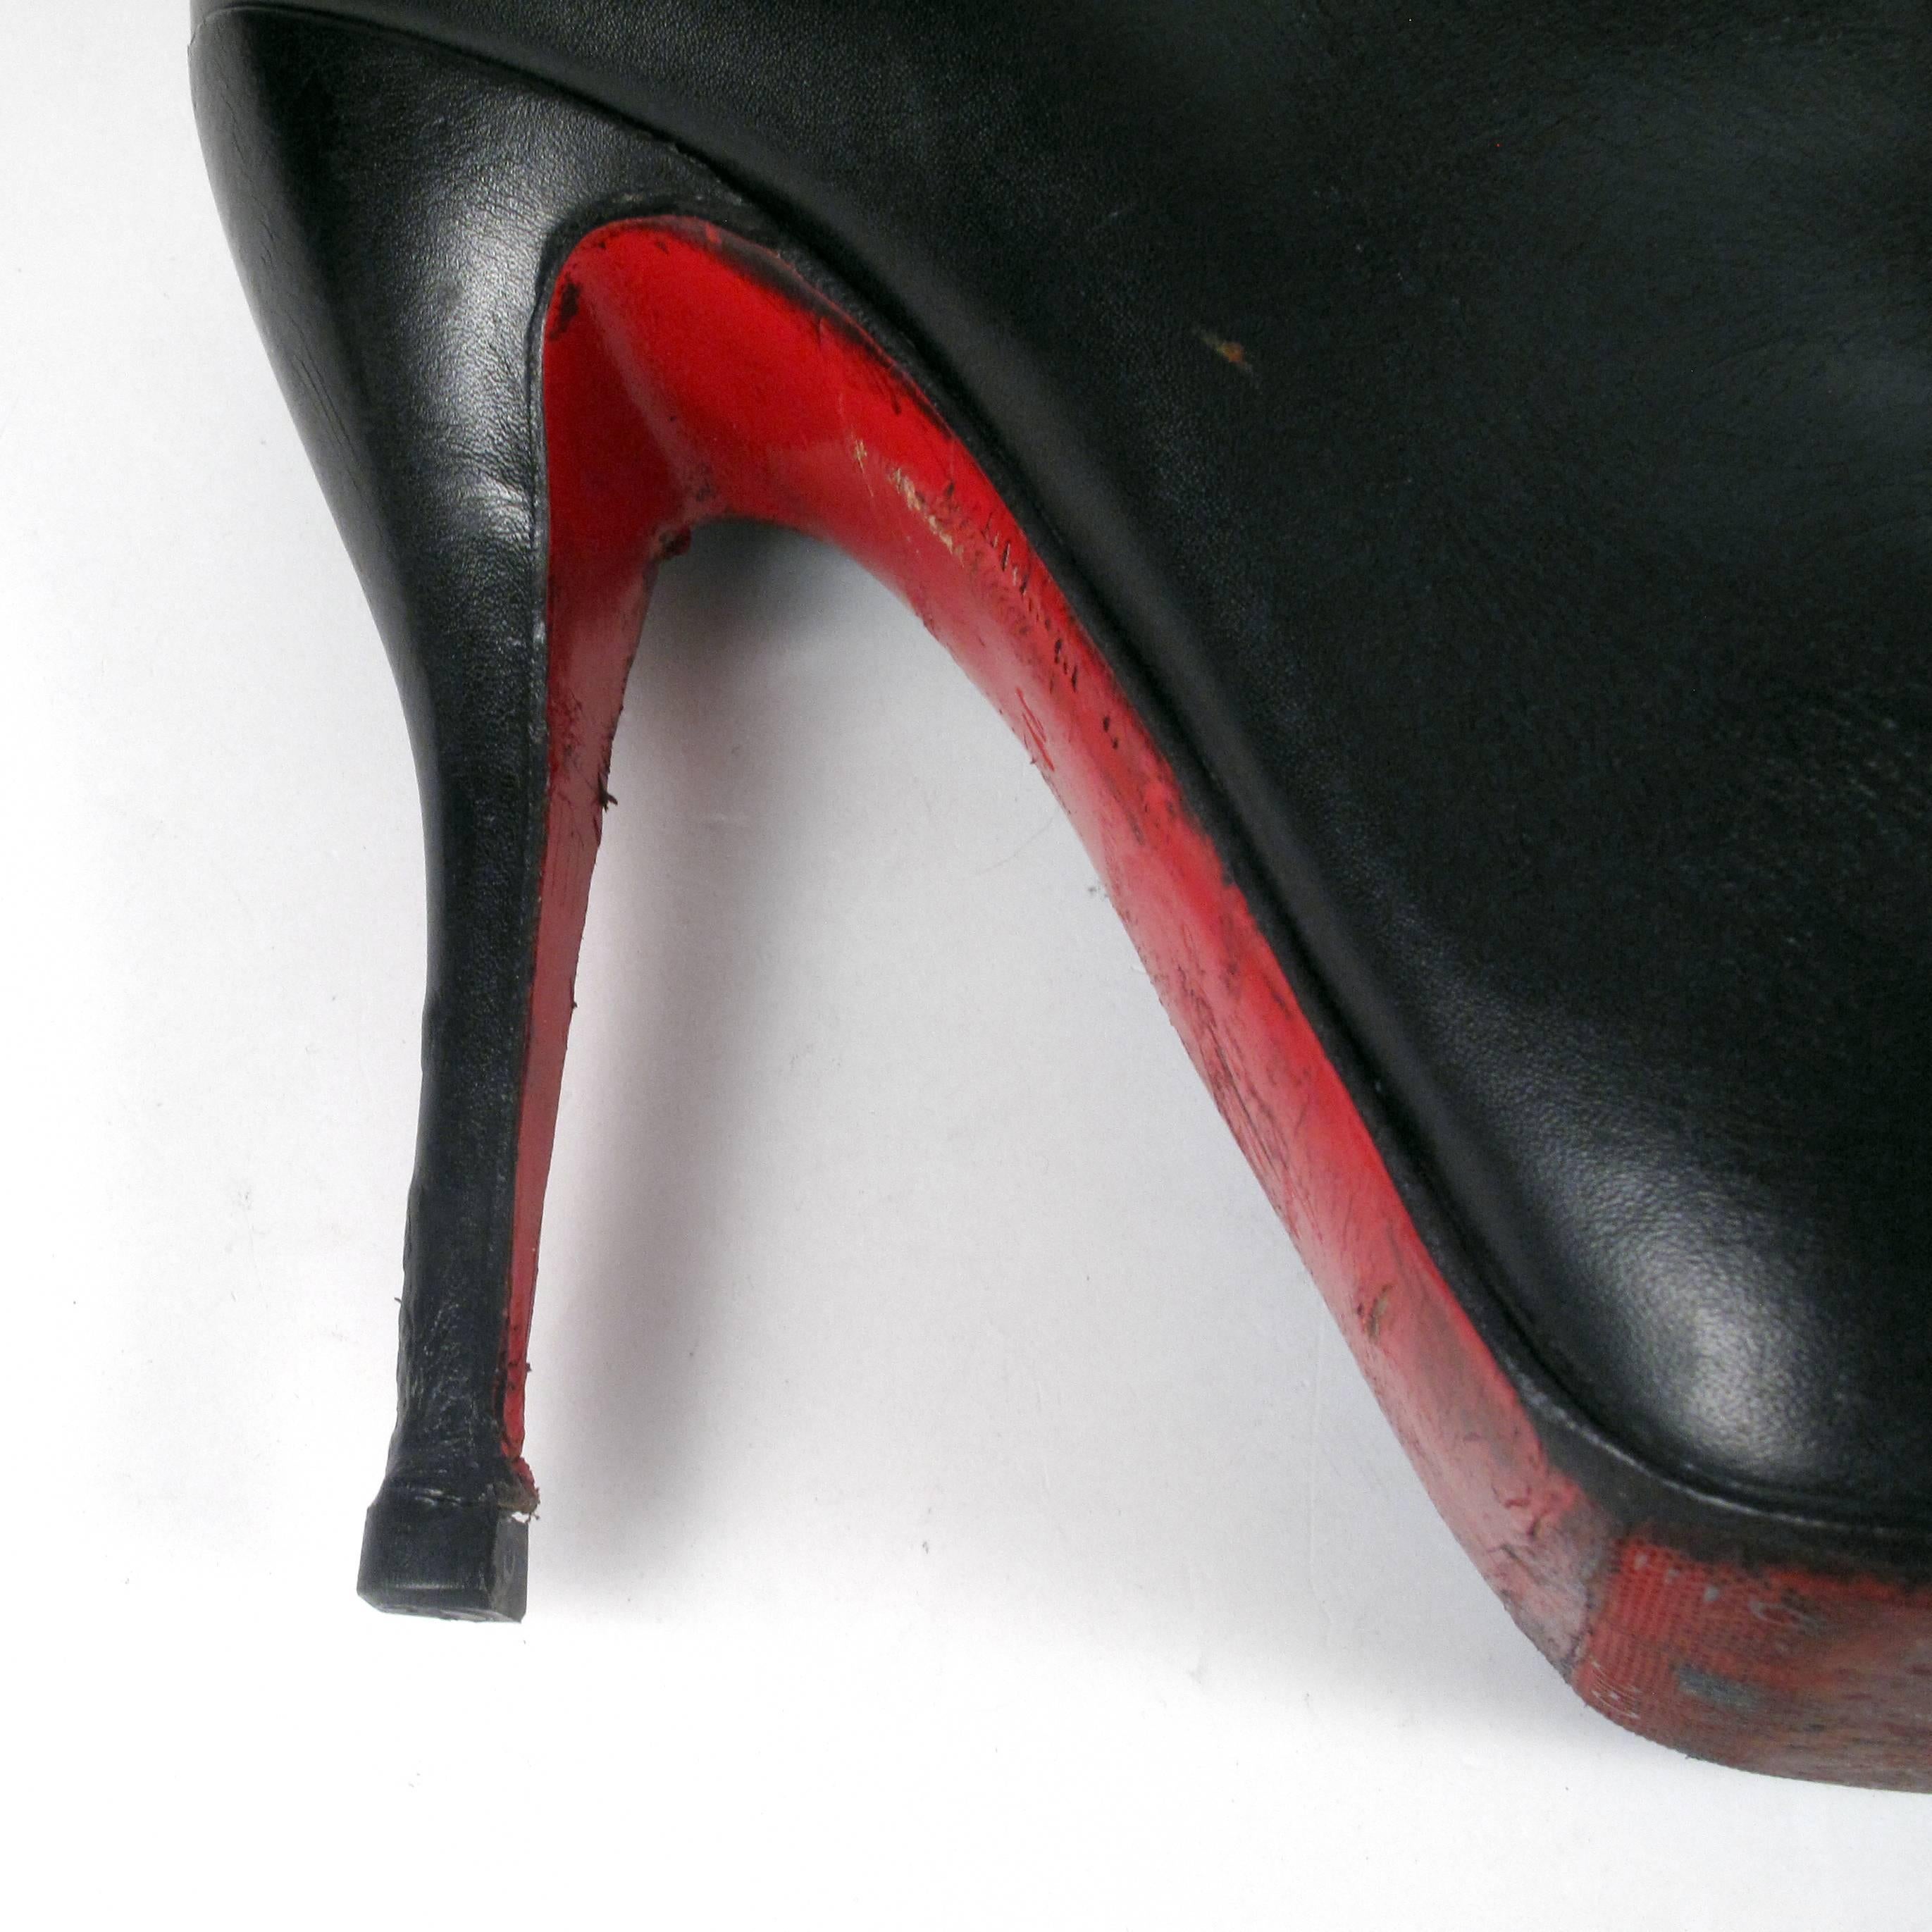 Christian Louboutin Knee High Boots 39 Black Leather120 Heels Shoes Feticha 2